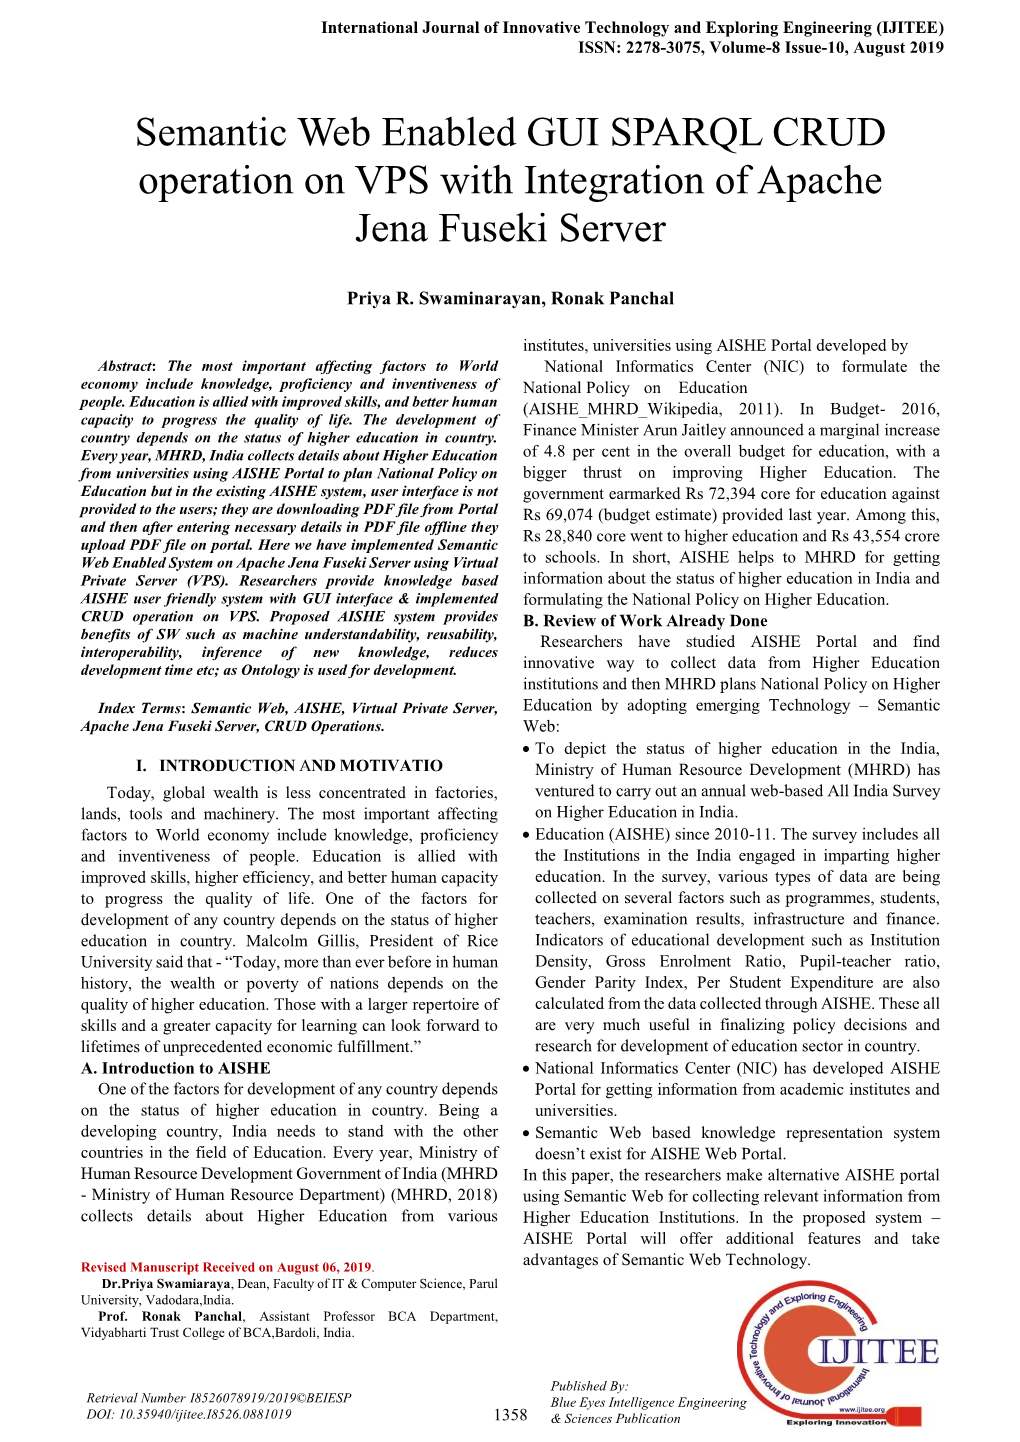 Semantic Web Enabled GUI SPARQL CRUD Operation on VPS with Integration of Apache Jena Fuseki Server